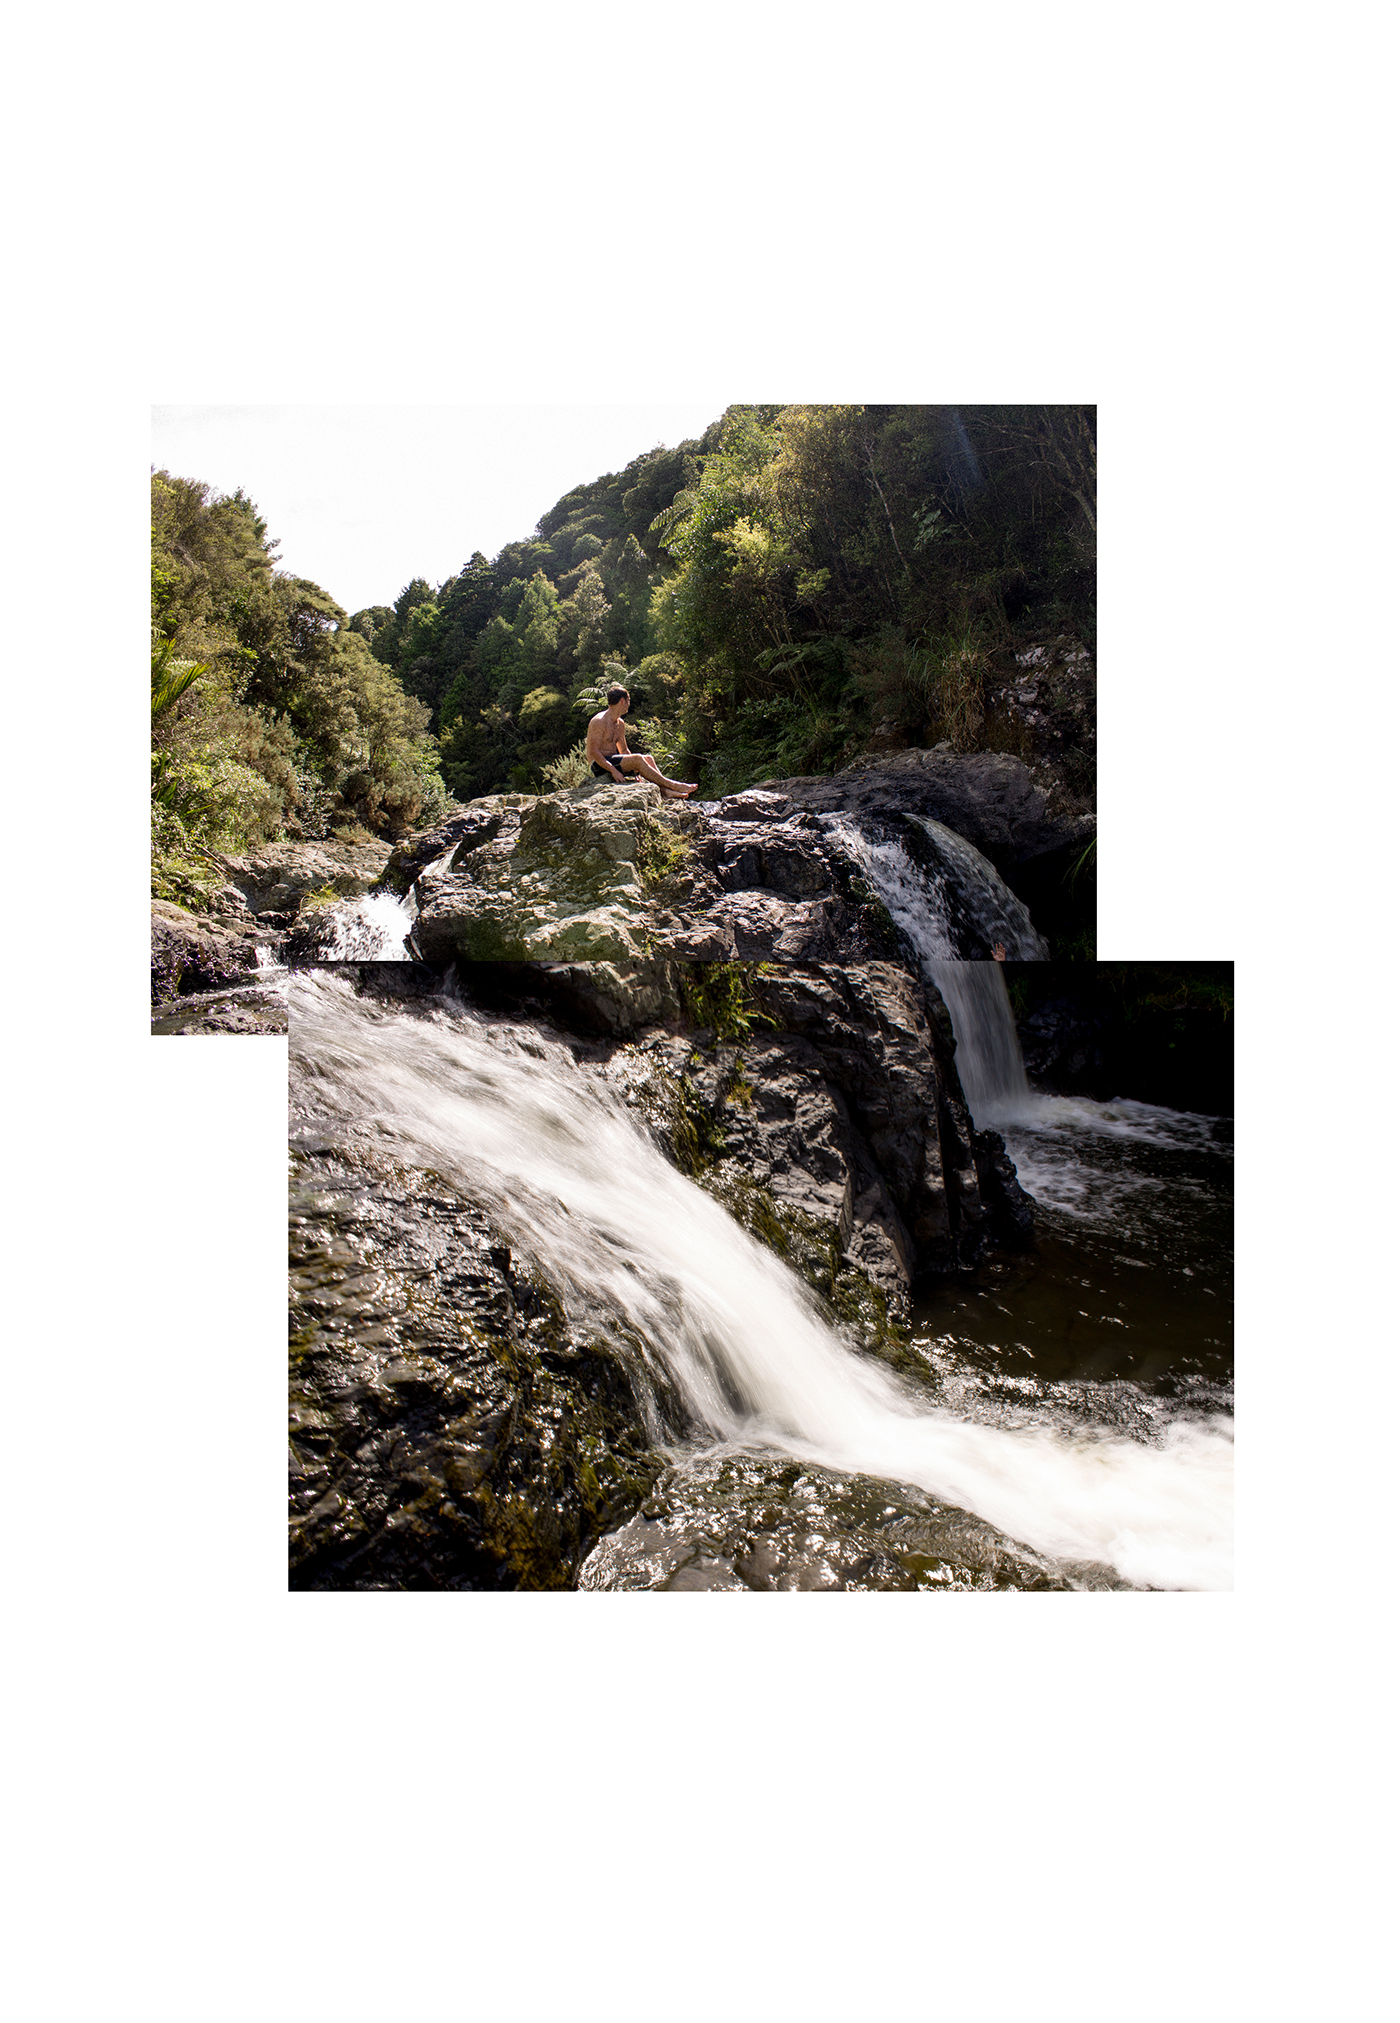 Pairoa New Zealand waterfall Perspective tramping